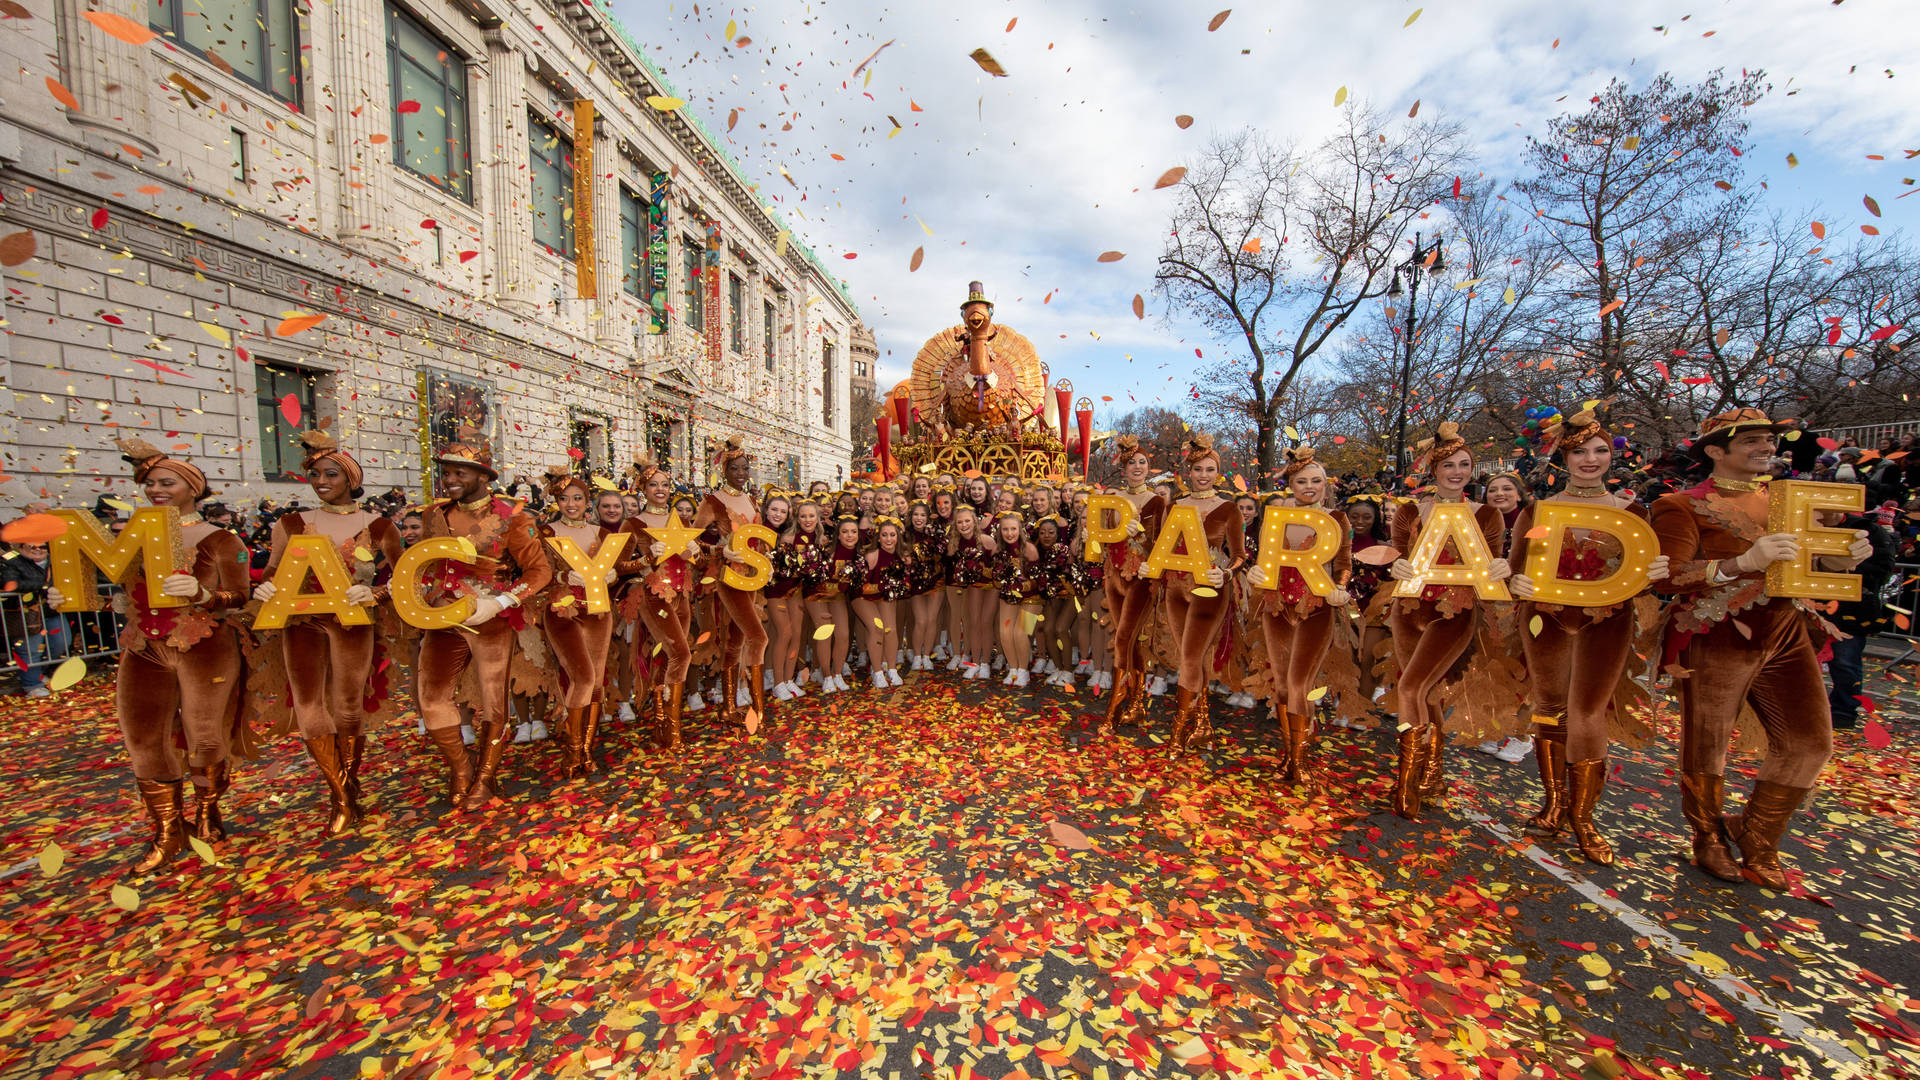 Macys Thanksgiving Parade Background